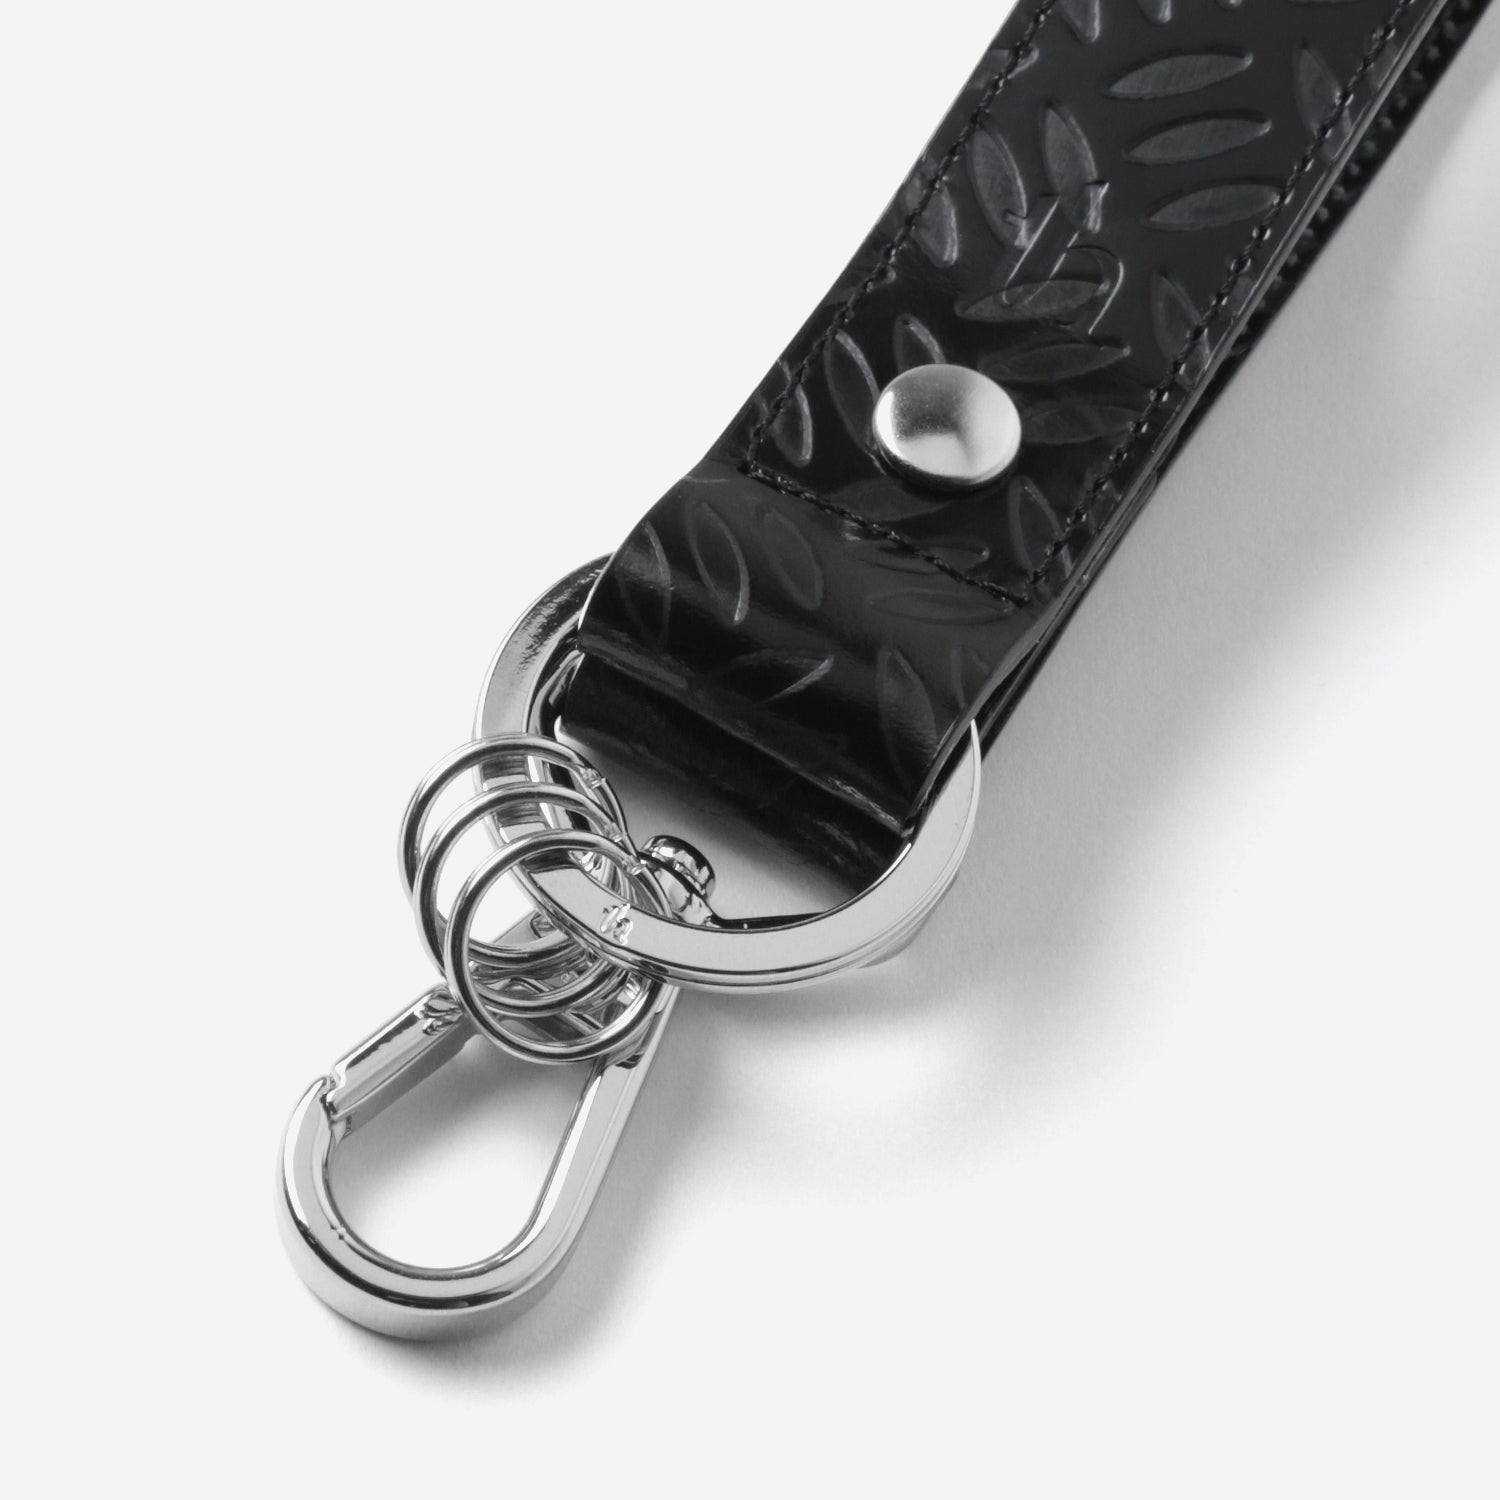 Embossed Key Ring Belt / black × silver